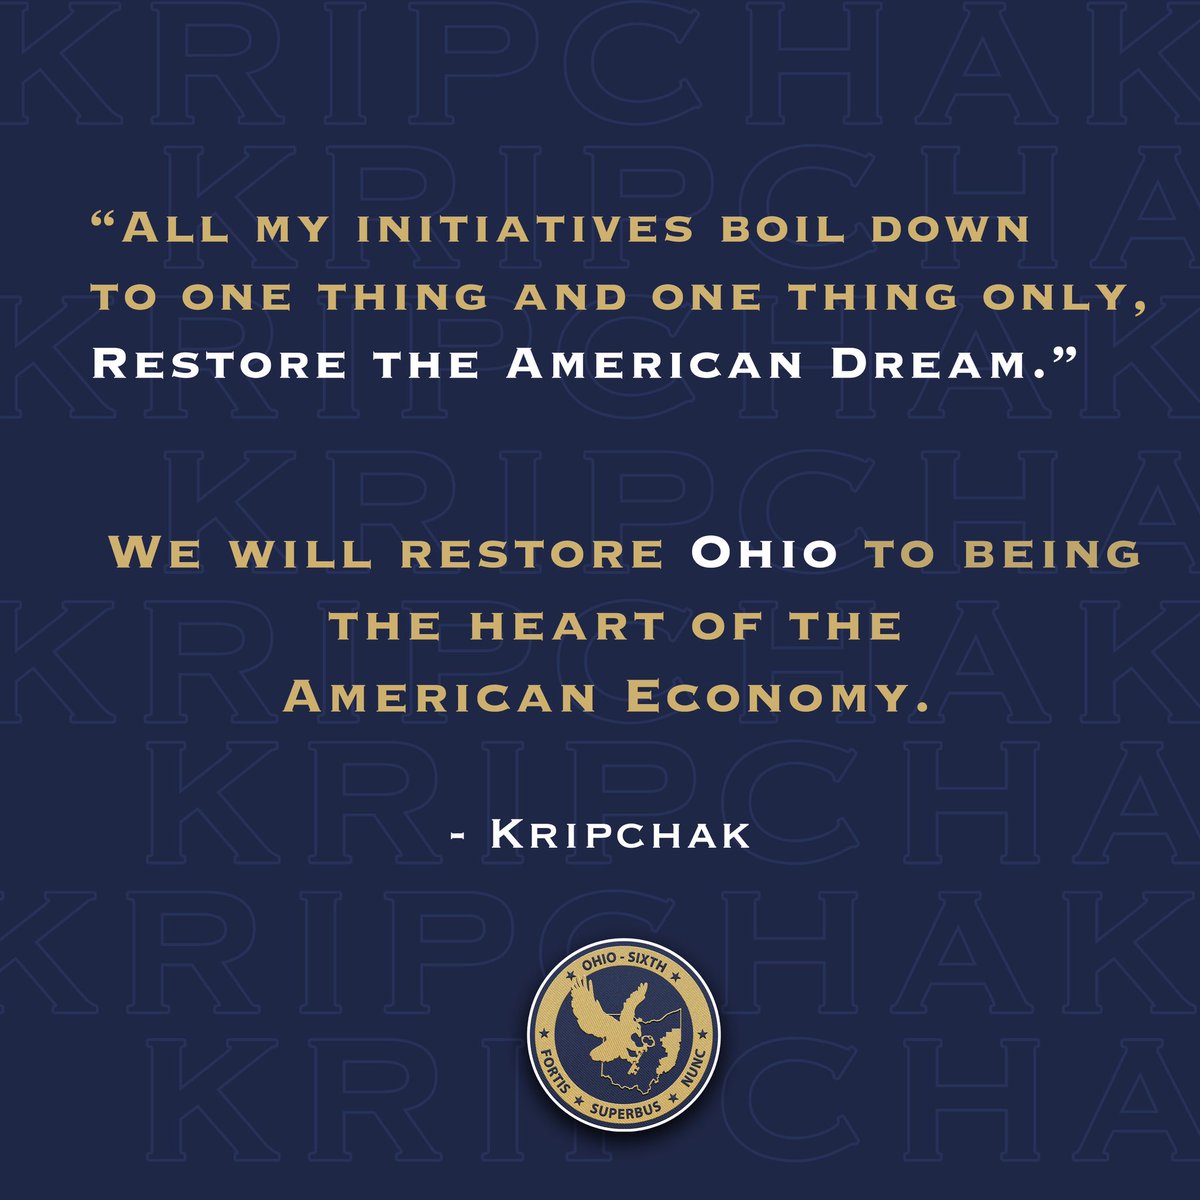 Ohio Strong, Ohio Proud, Ohio Now. For more information, visit kripchak.com • #MakeOhioBlueAgain